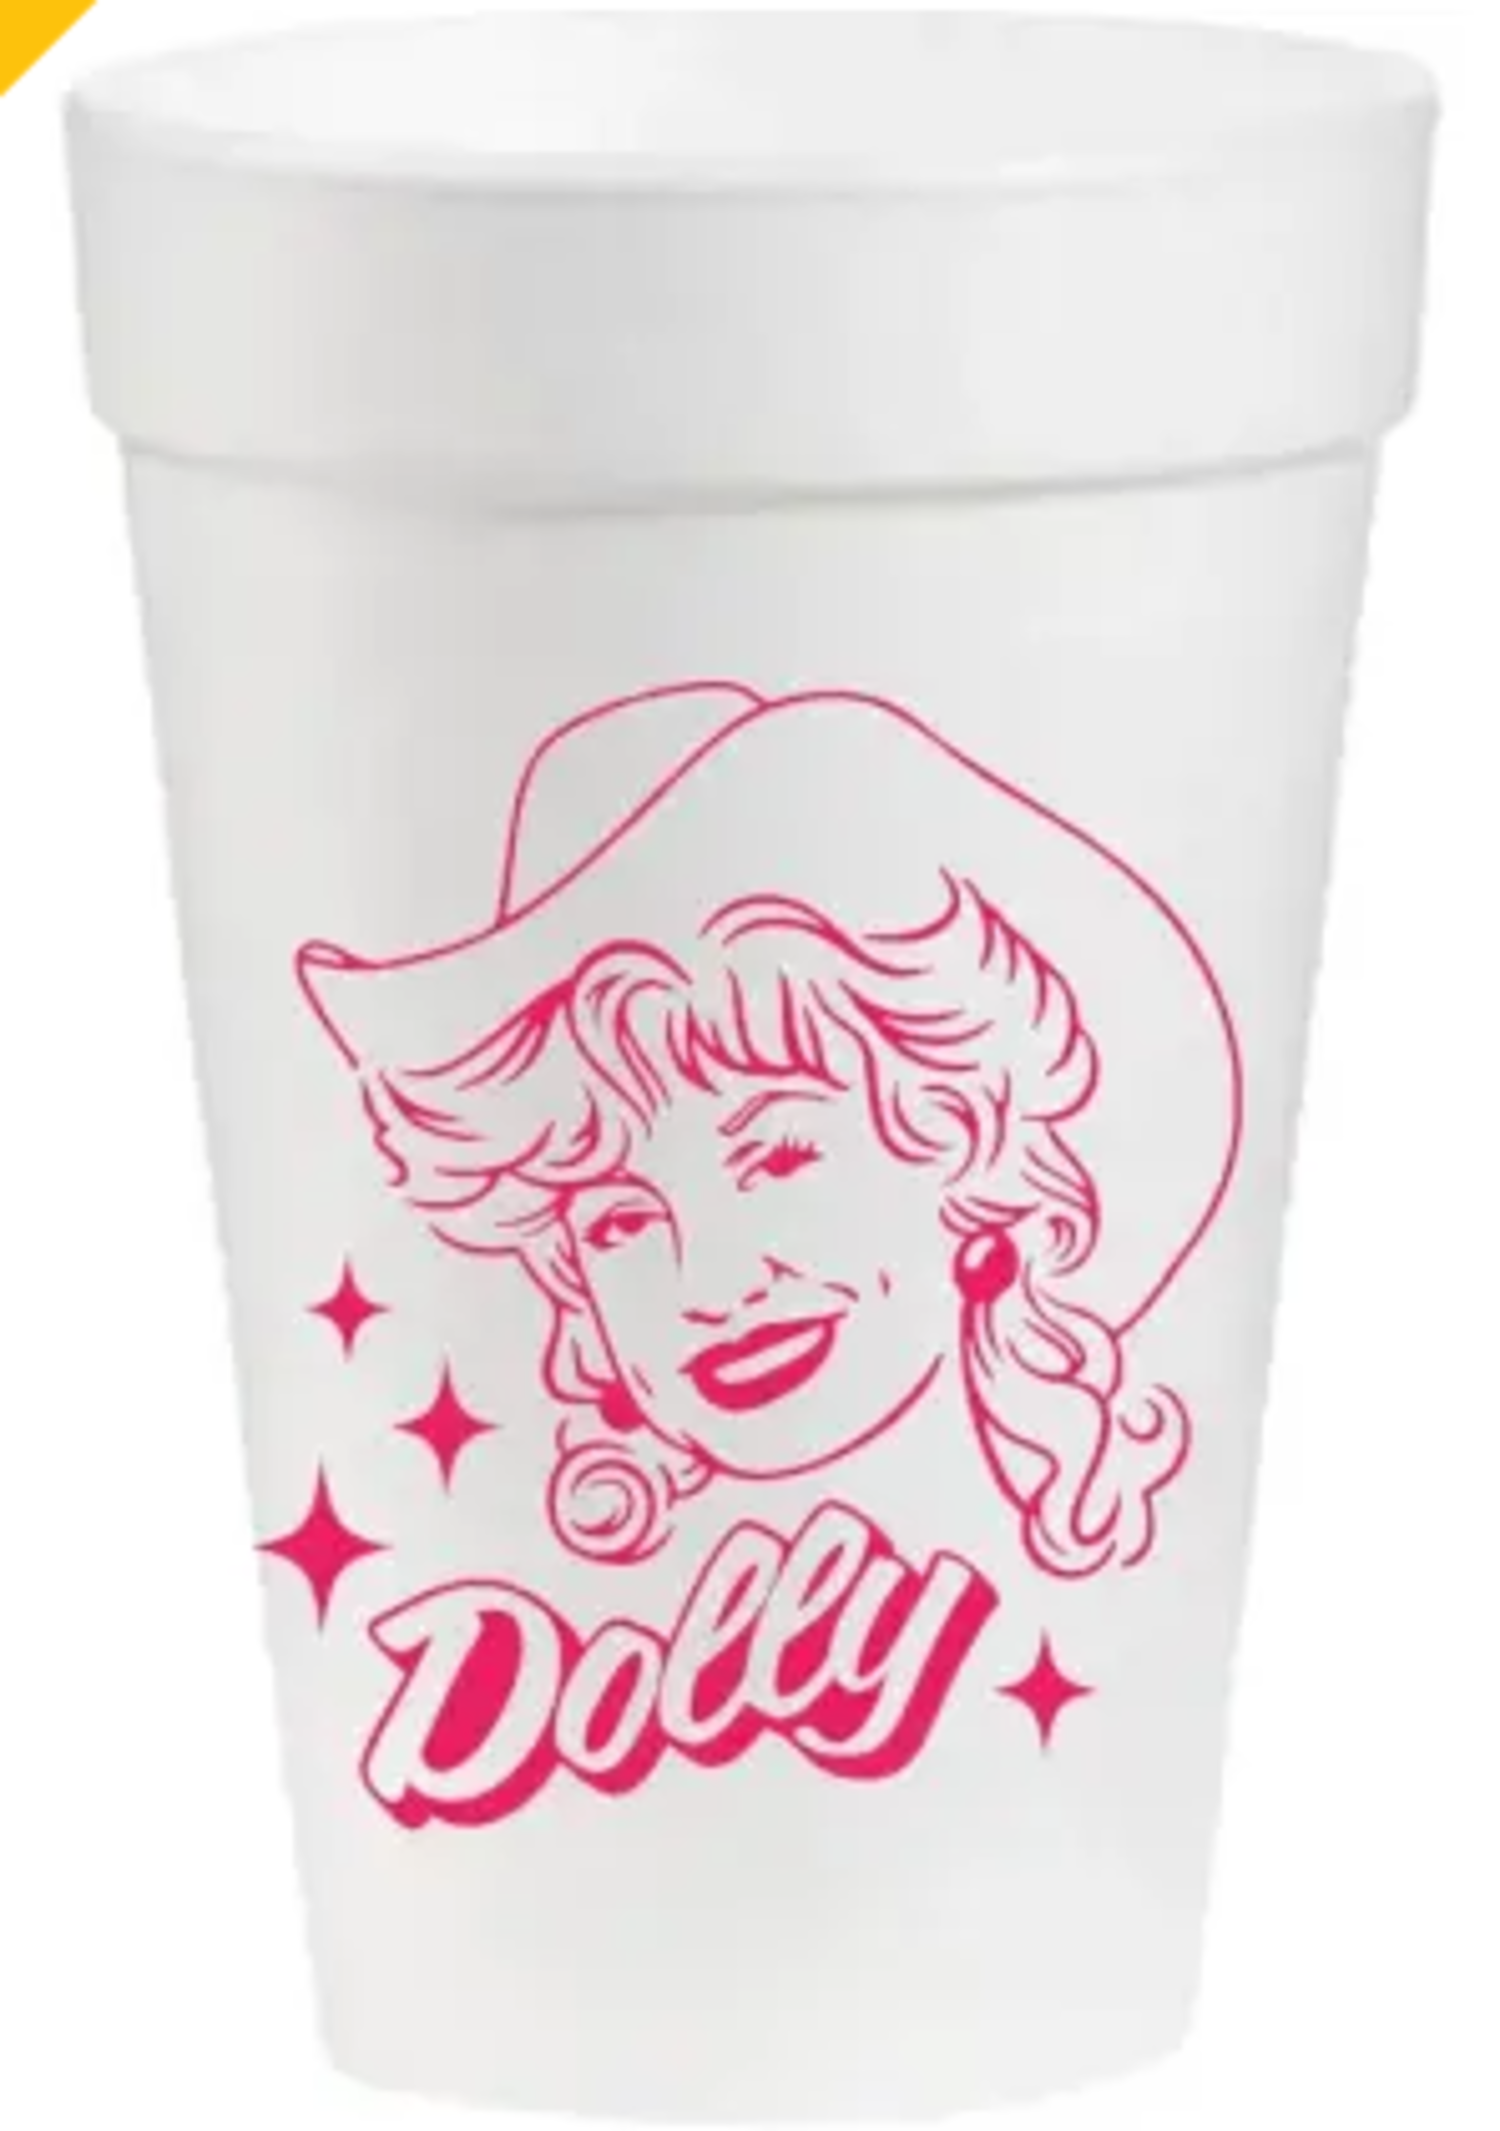 https://cdn.shoplightspeed.com/shops/606996/files/53870700/1500x4000x3/pink-machine-dolly-16oz-styrofoam-cups.jpg